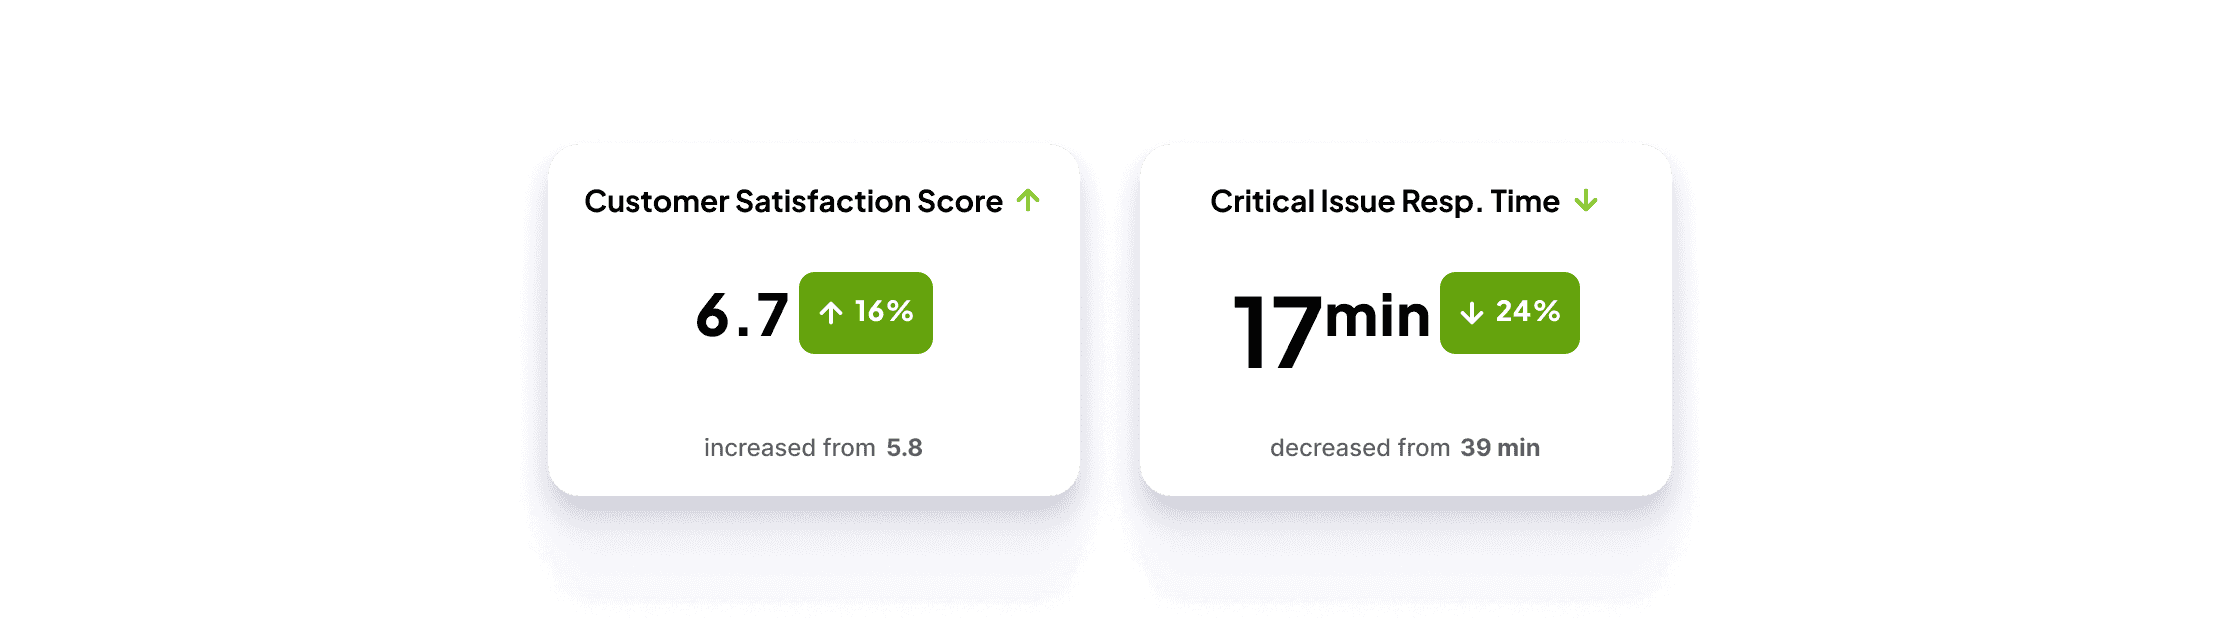 Customer satisfaction score goes up